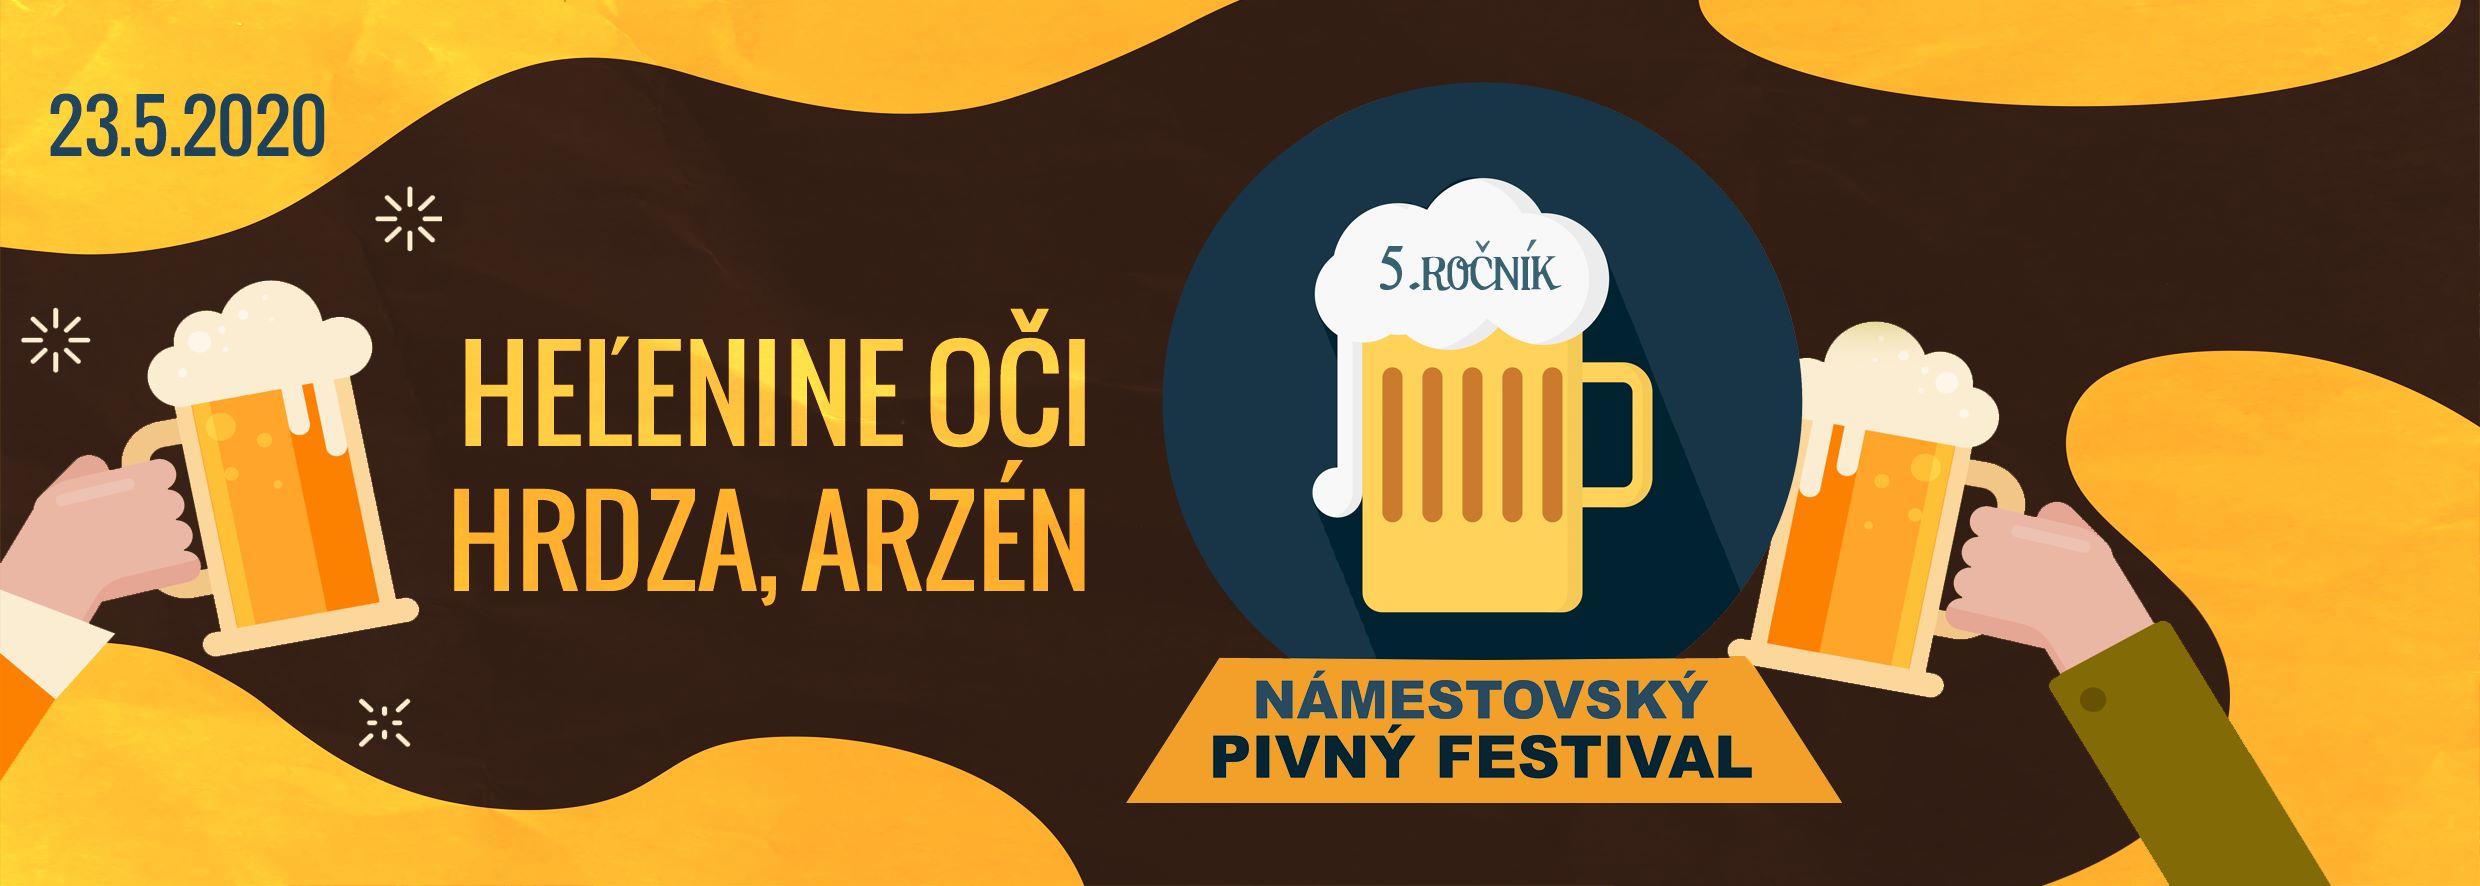 Nmestovsk Pivn Festival 2020 - 5. ronk